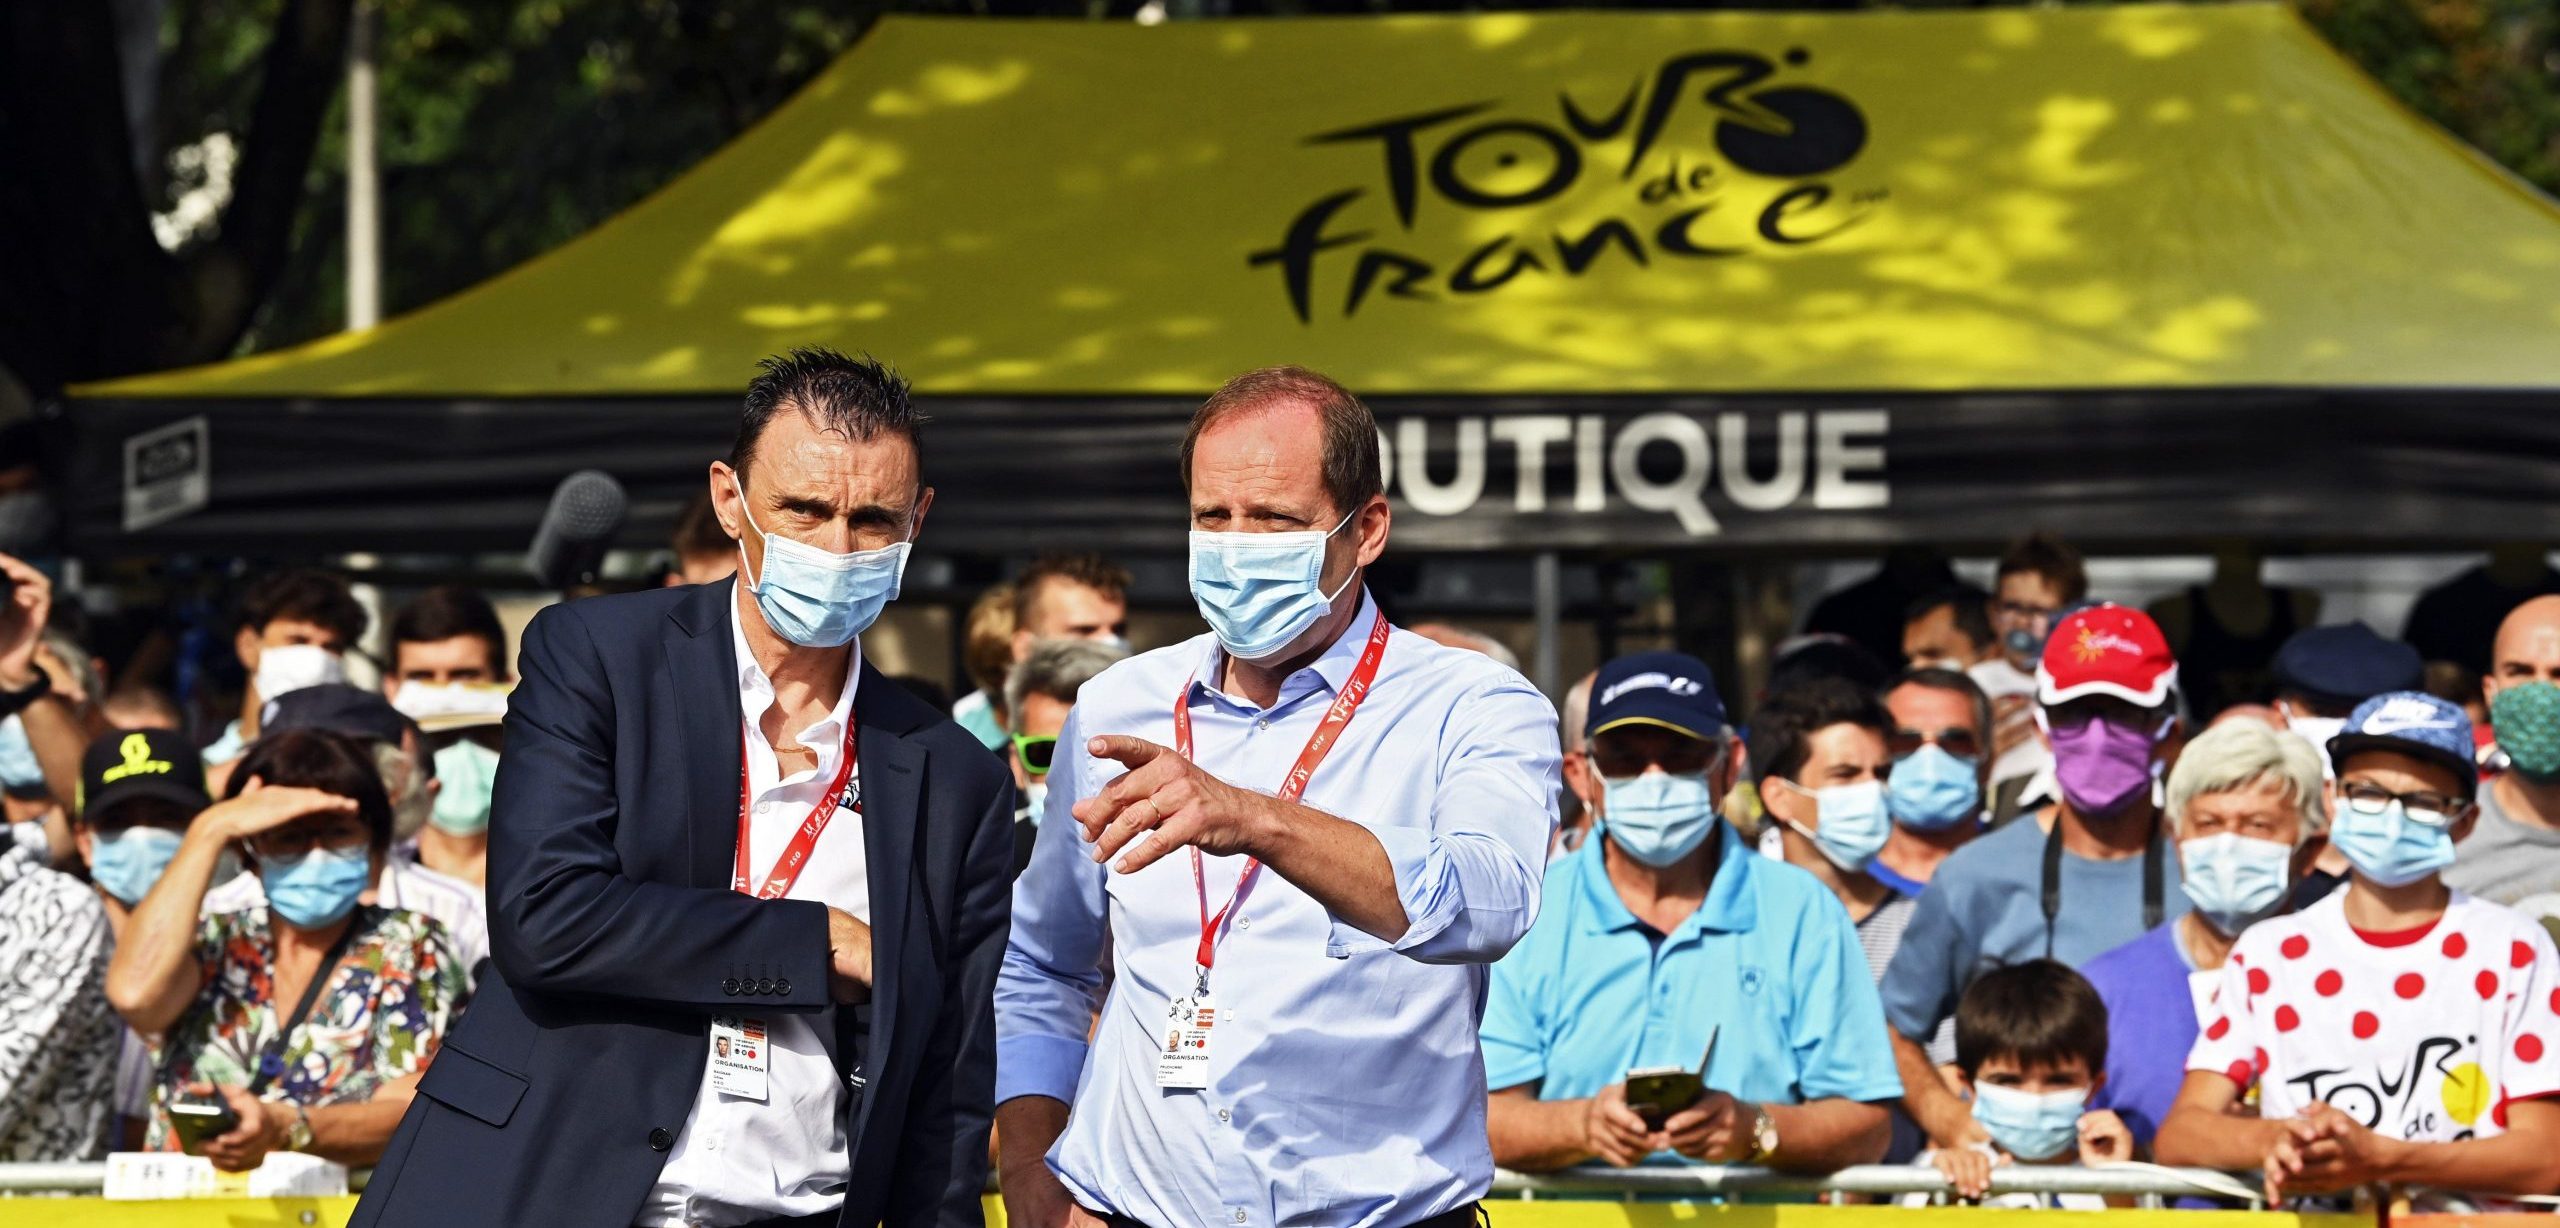 Tourbaas Christian Prudhomme tijdens het Criterium du Dauphiné 2020